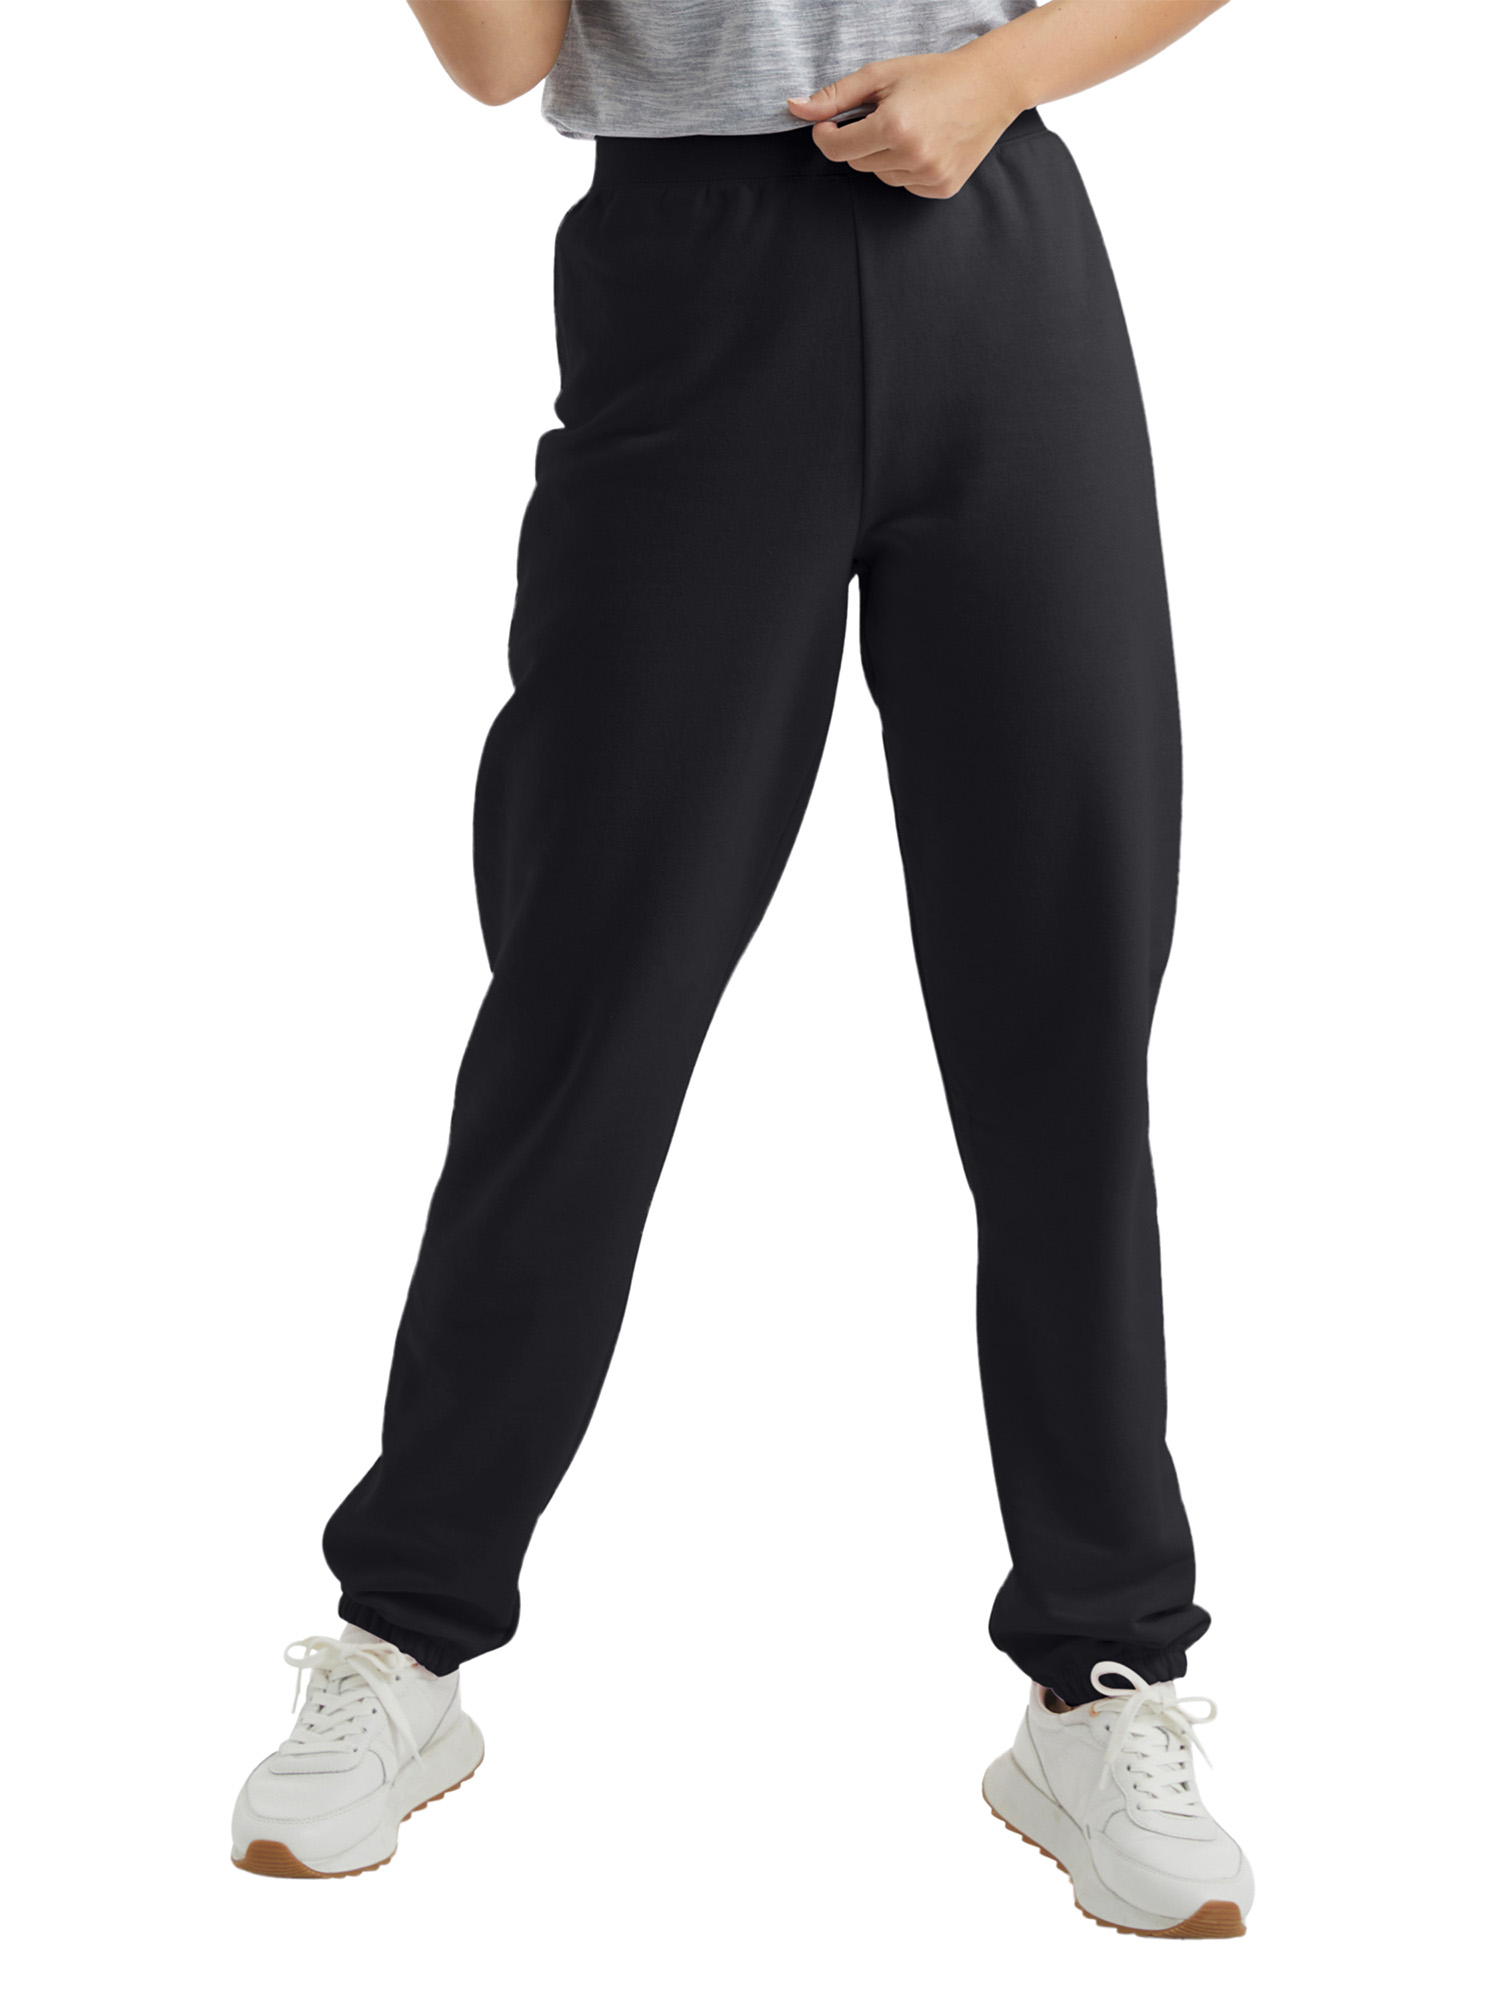 Hanes ComfortSoft Women's Sweatpants, 29” Inseam, Sizes S-XXL - image 1 of 6